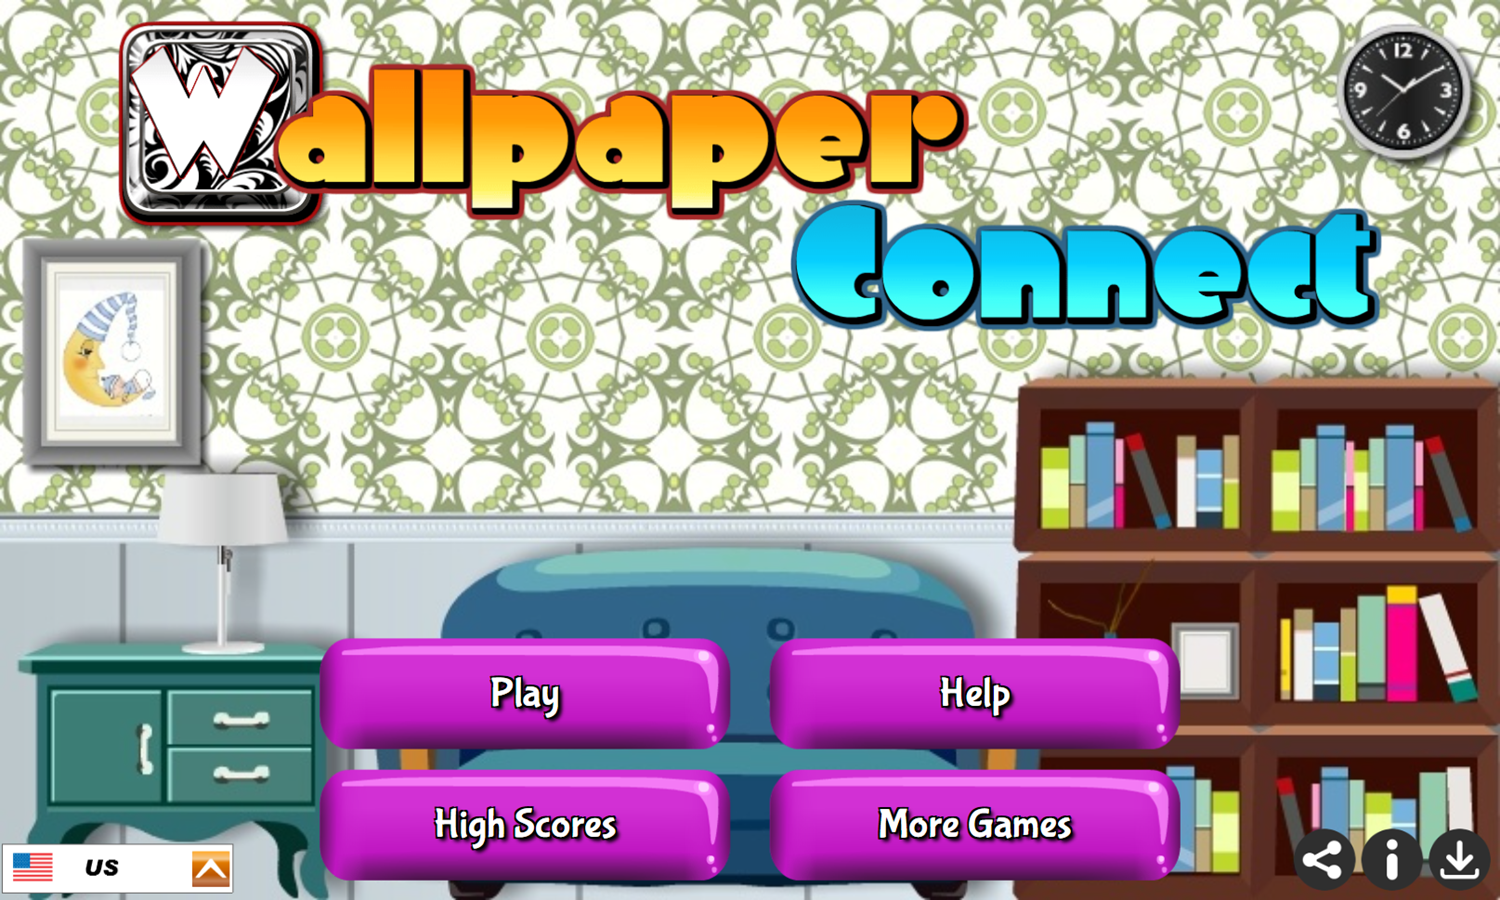 Wallpaper Connect Game Welcome Screen Screenshot.